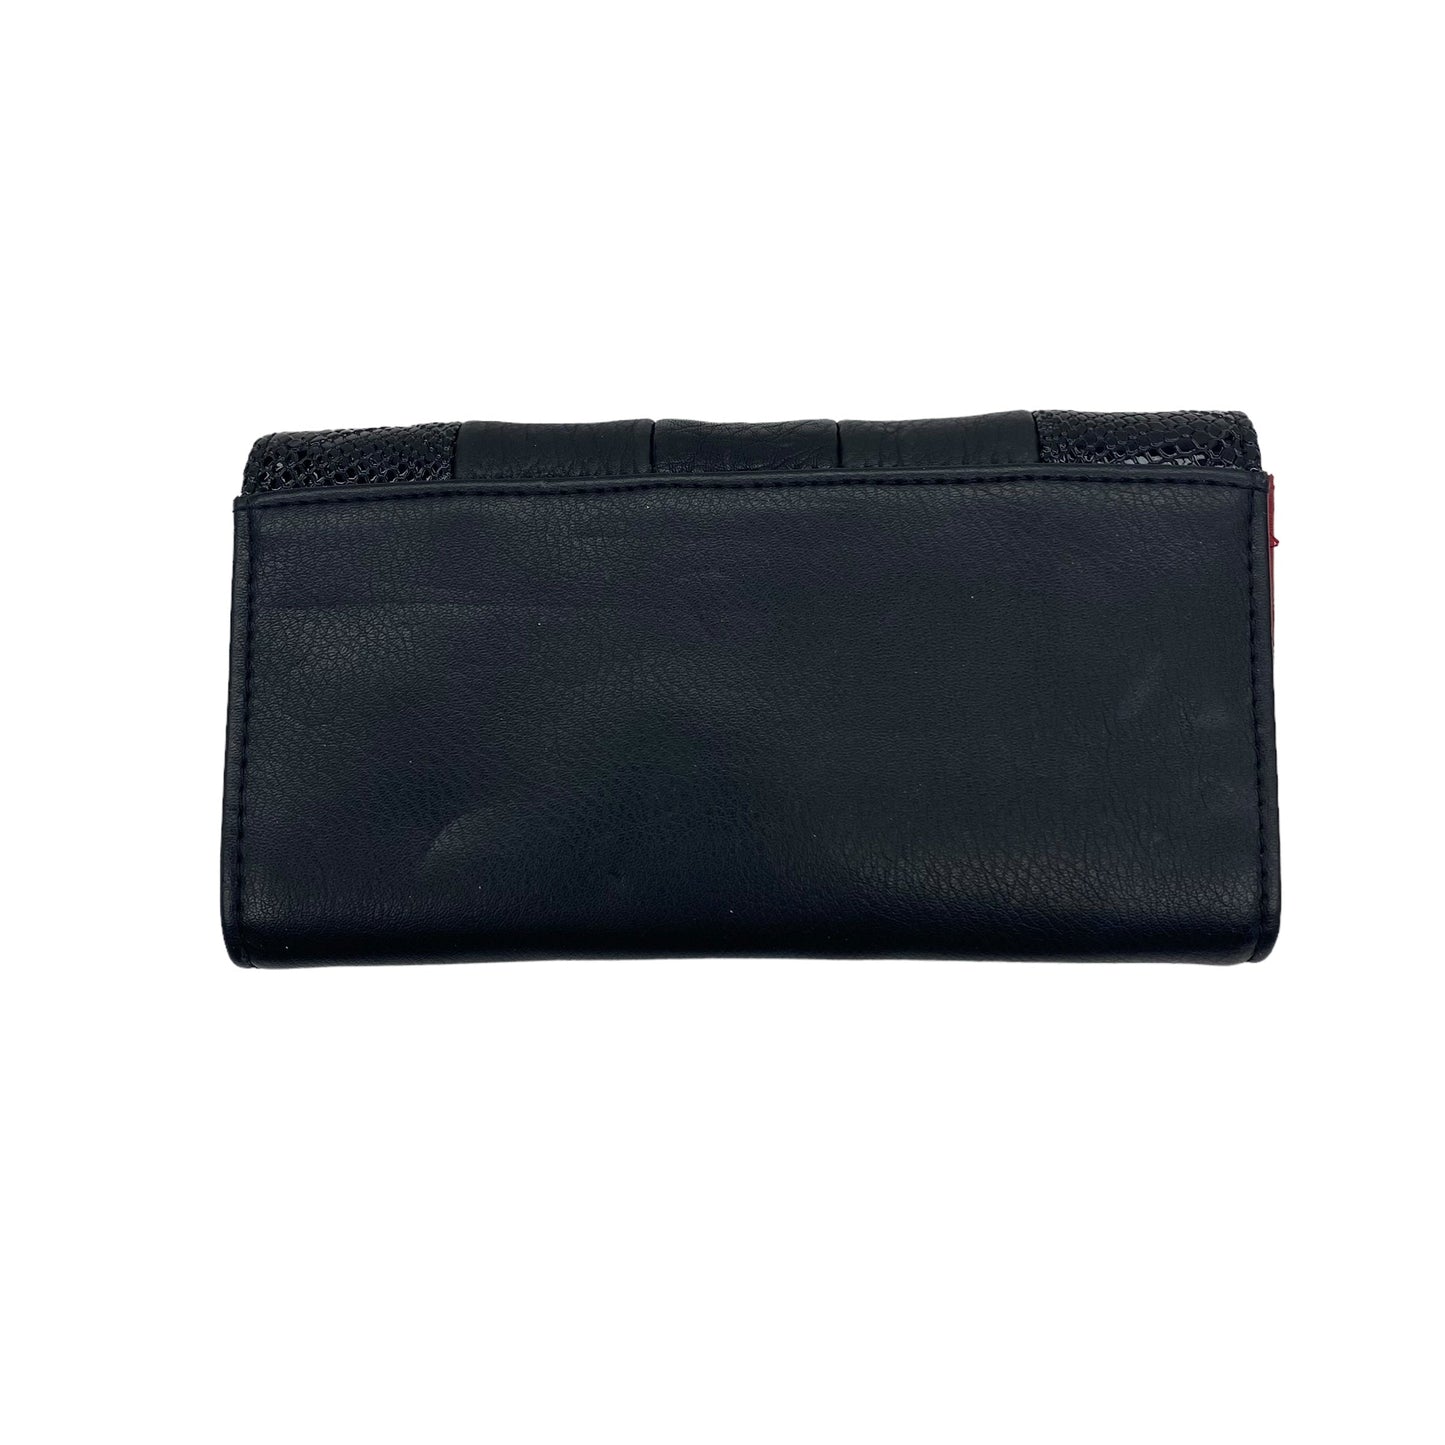 Wallet By Enzo Angiolini  Size: Medium